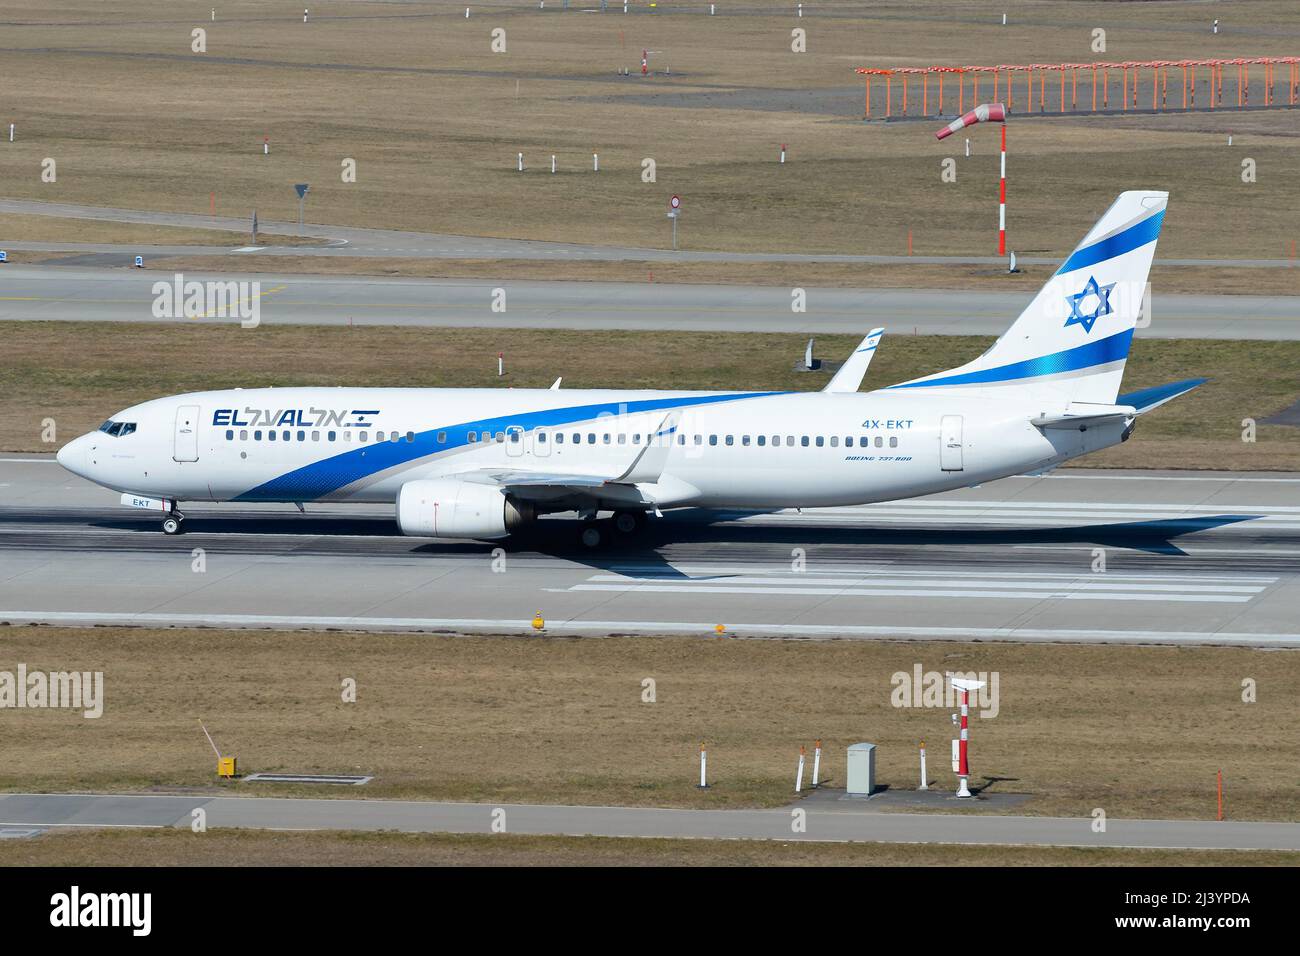 El Al Israel Airlines Boeing 737 airplane. Aircraft operating for israel flag carrier El Al inbound bound to Tel Aviv. Stock Photo